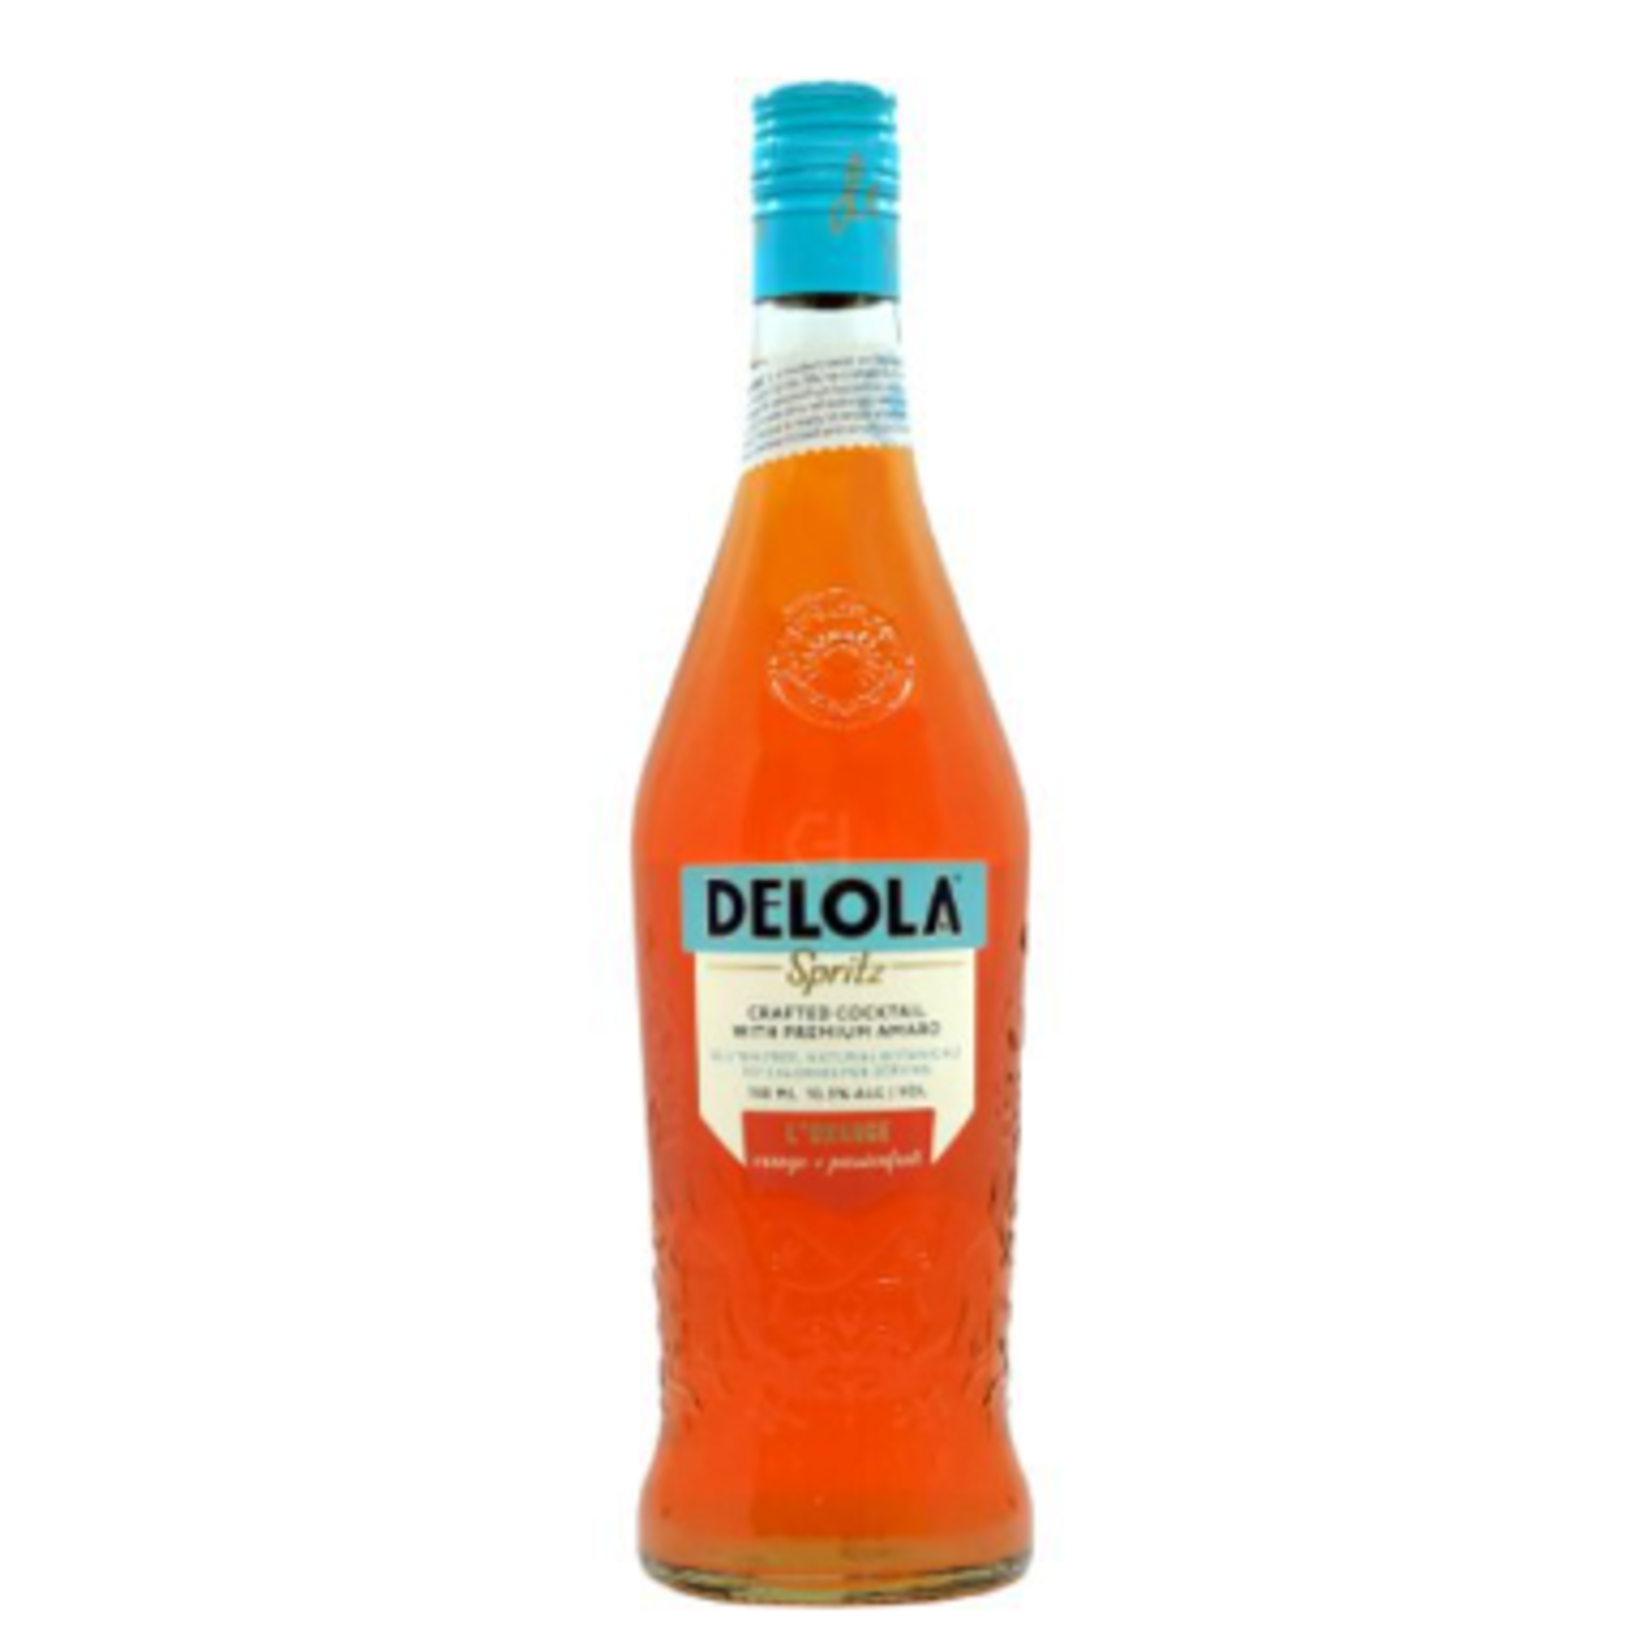 DeLola DeLola Spritz L'Orange Crafted Cocktail